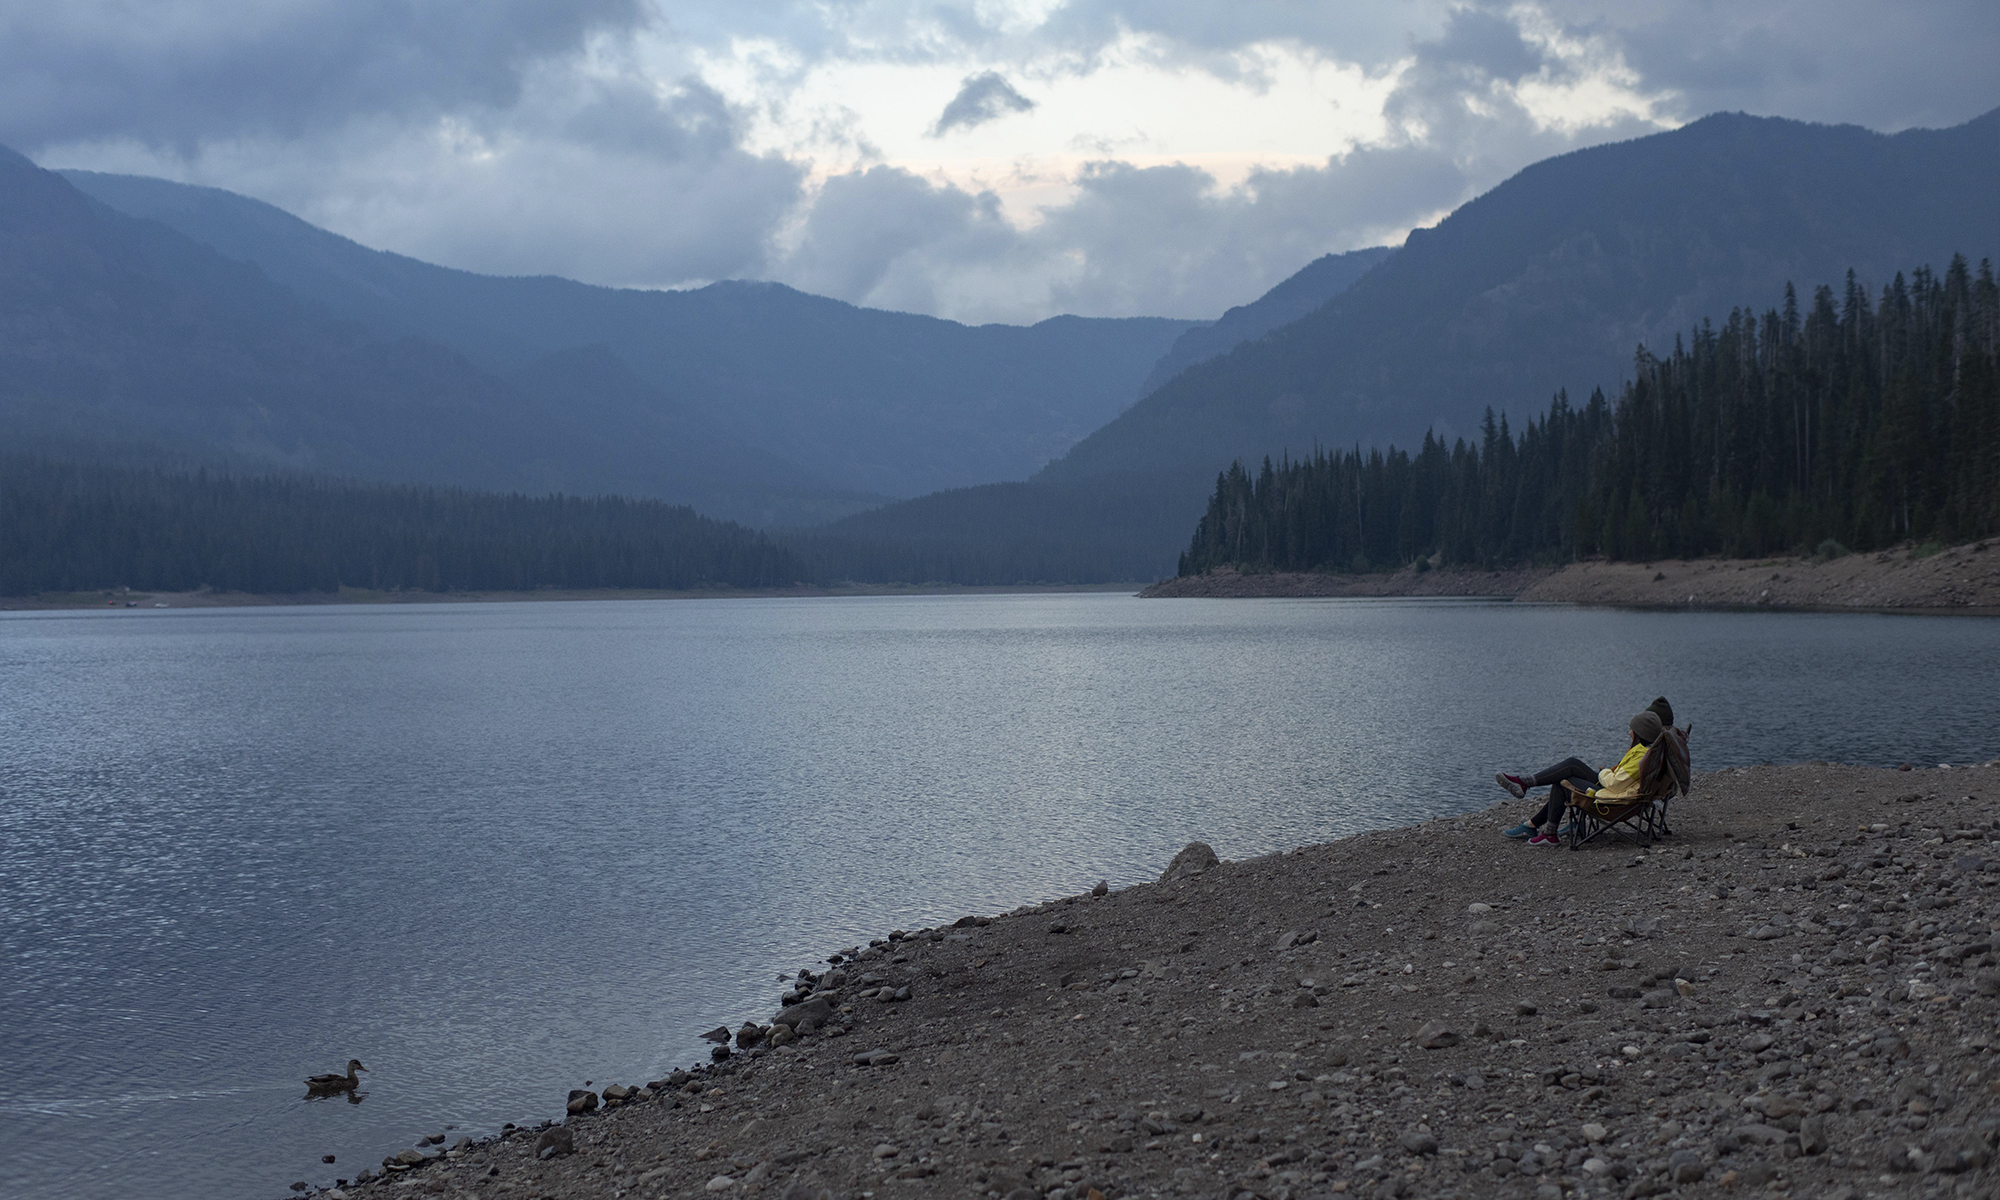 Two people enjoying the view at Hyalite lake near Bozeman, MT.